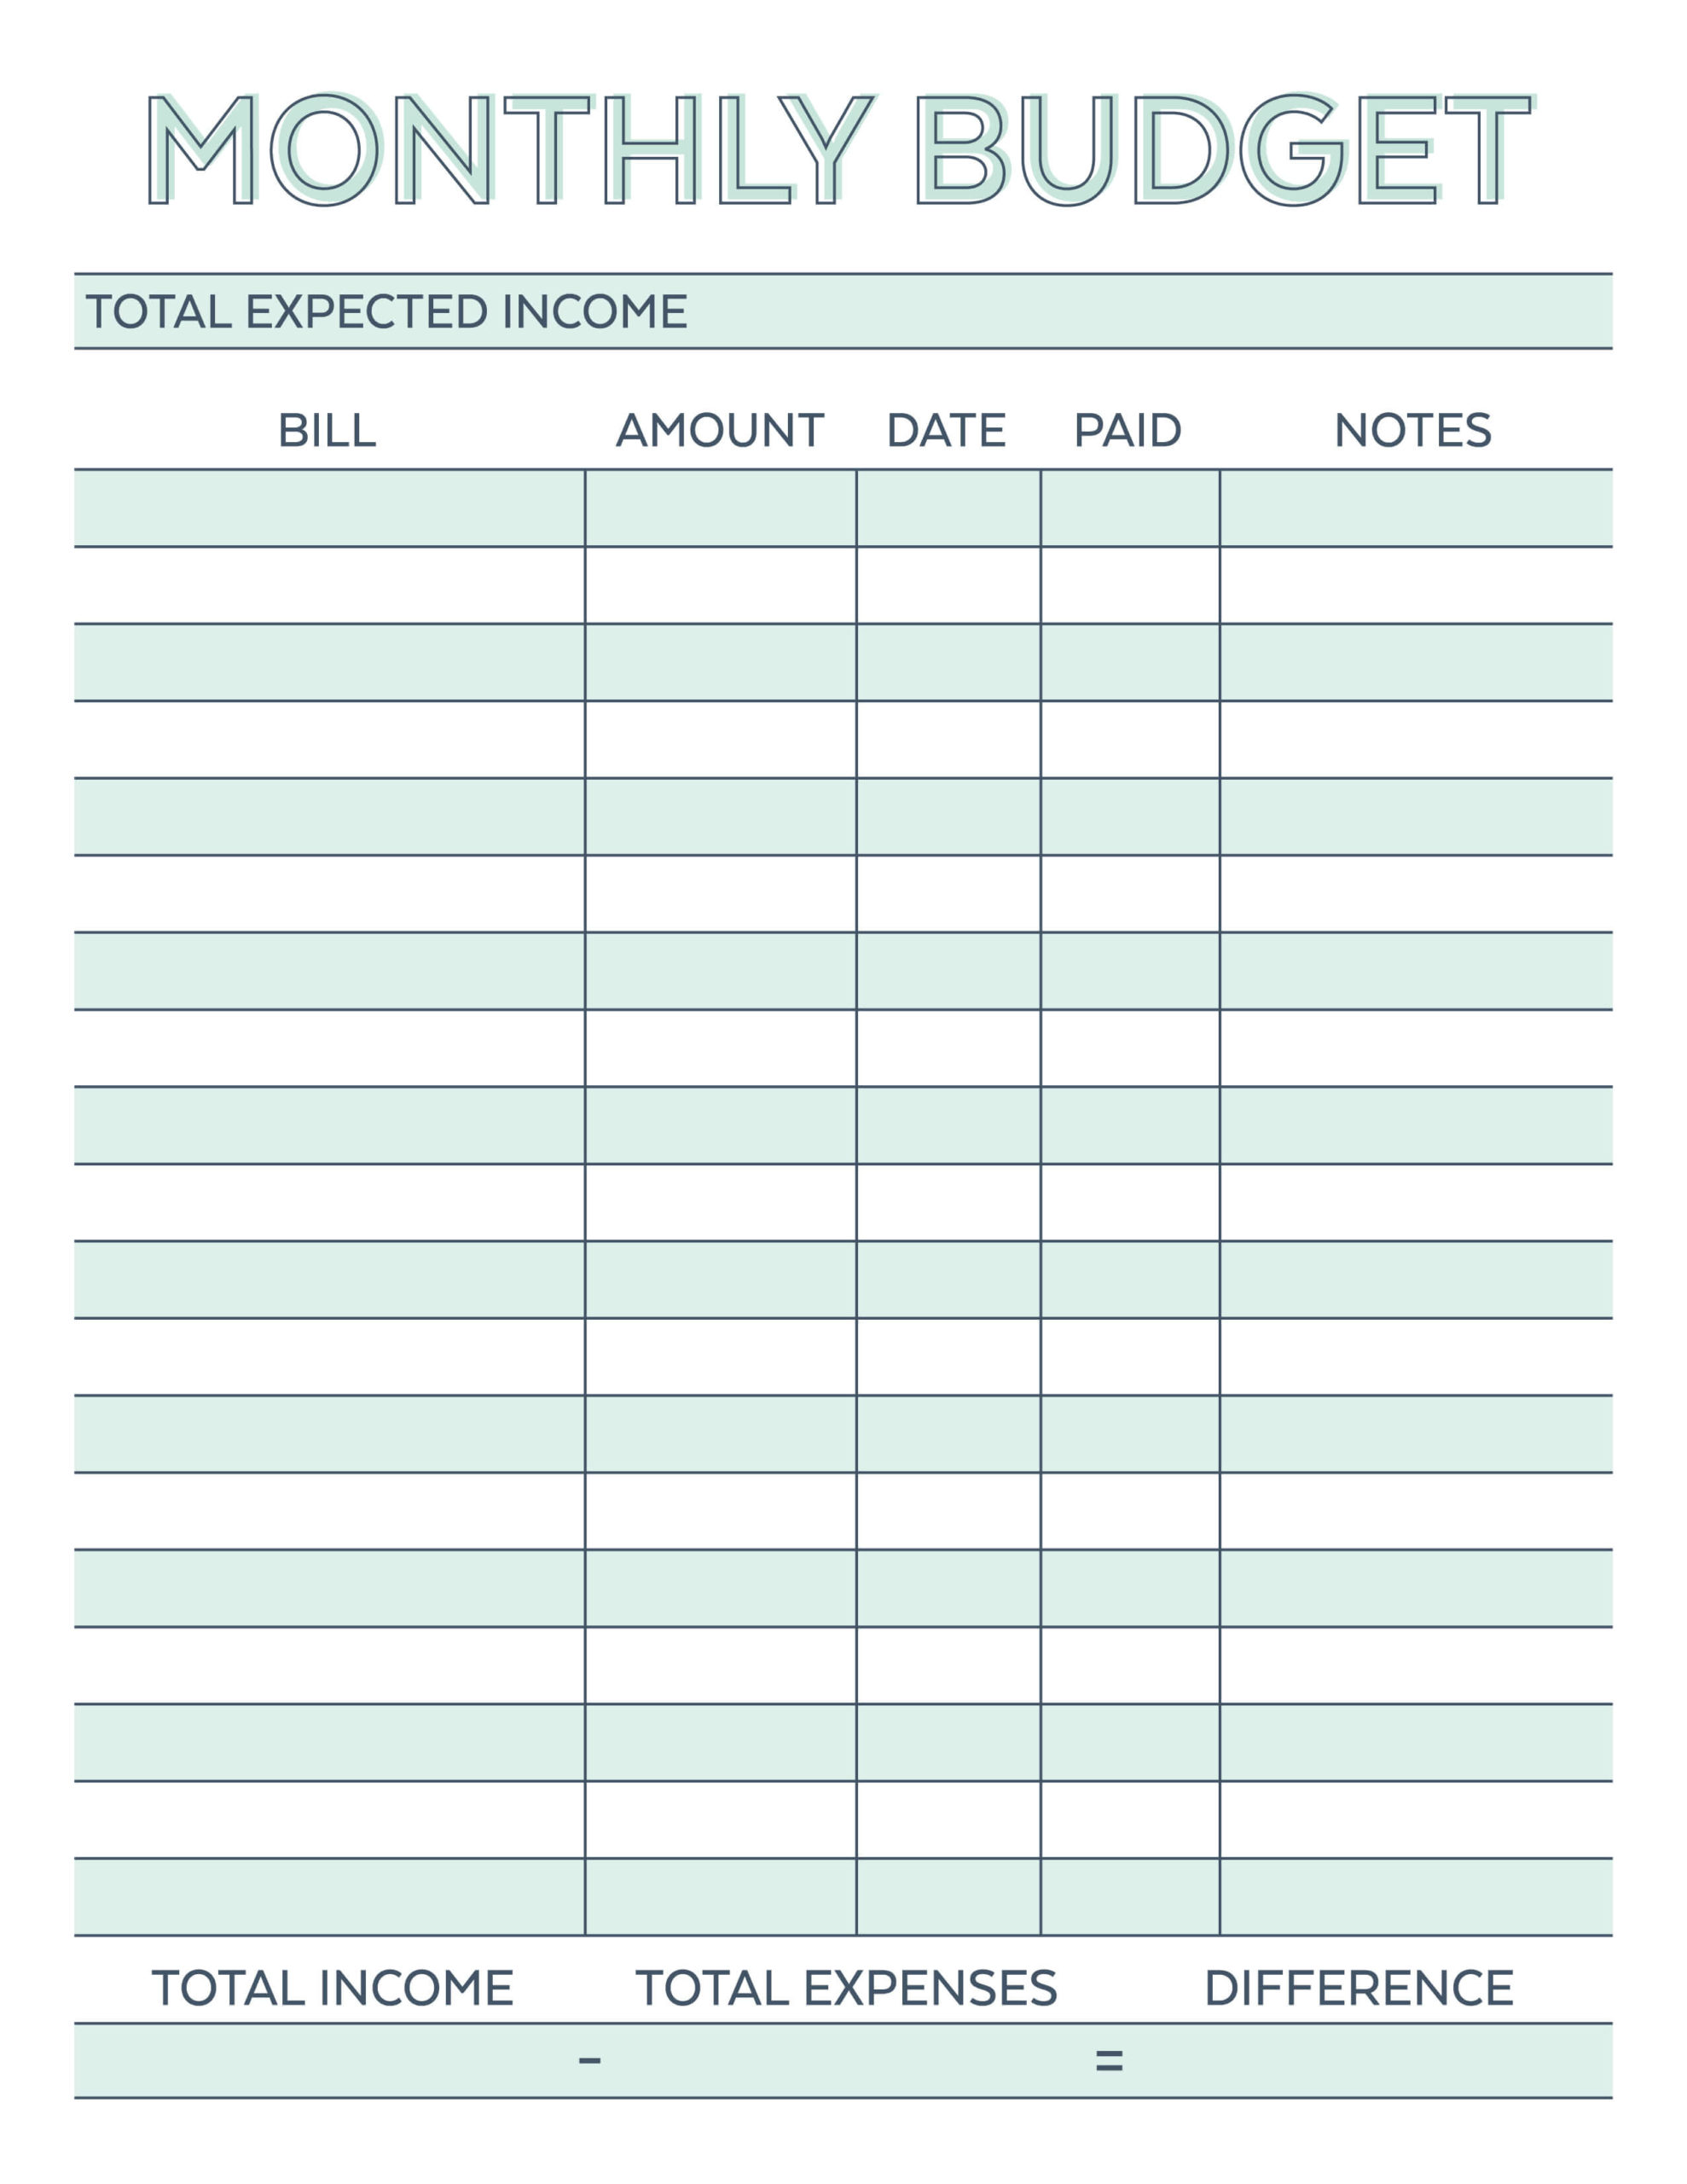 Monthly Budget Planner - Free Printable Budget Worksheet inside Fresh Budget Planner Template Free Download